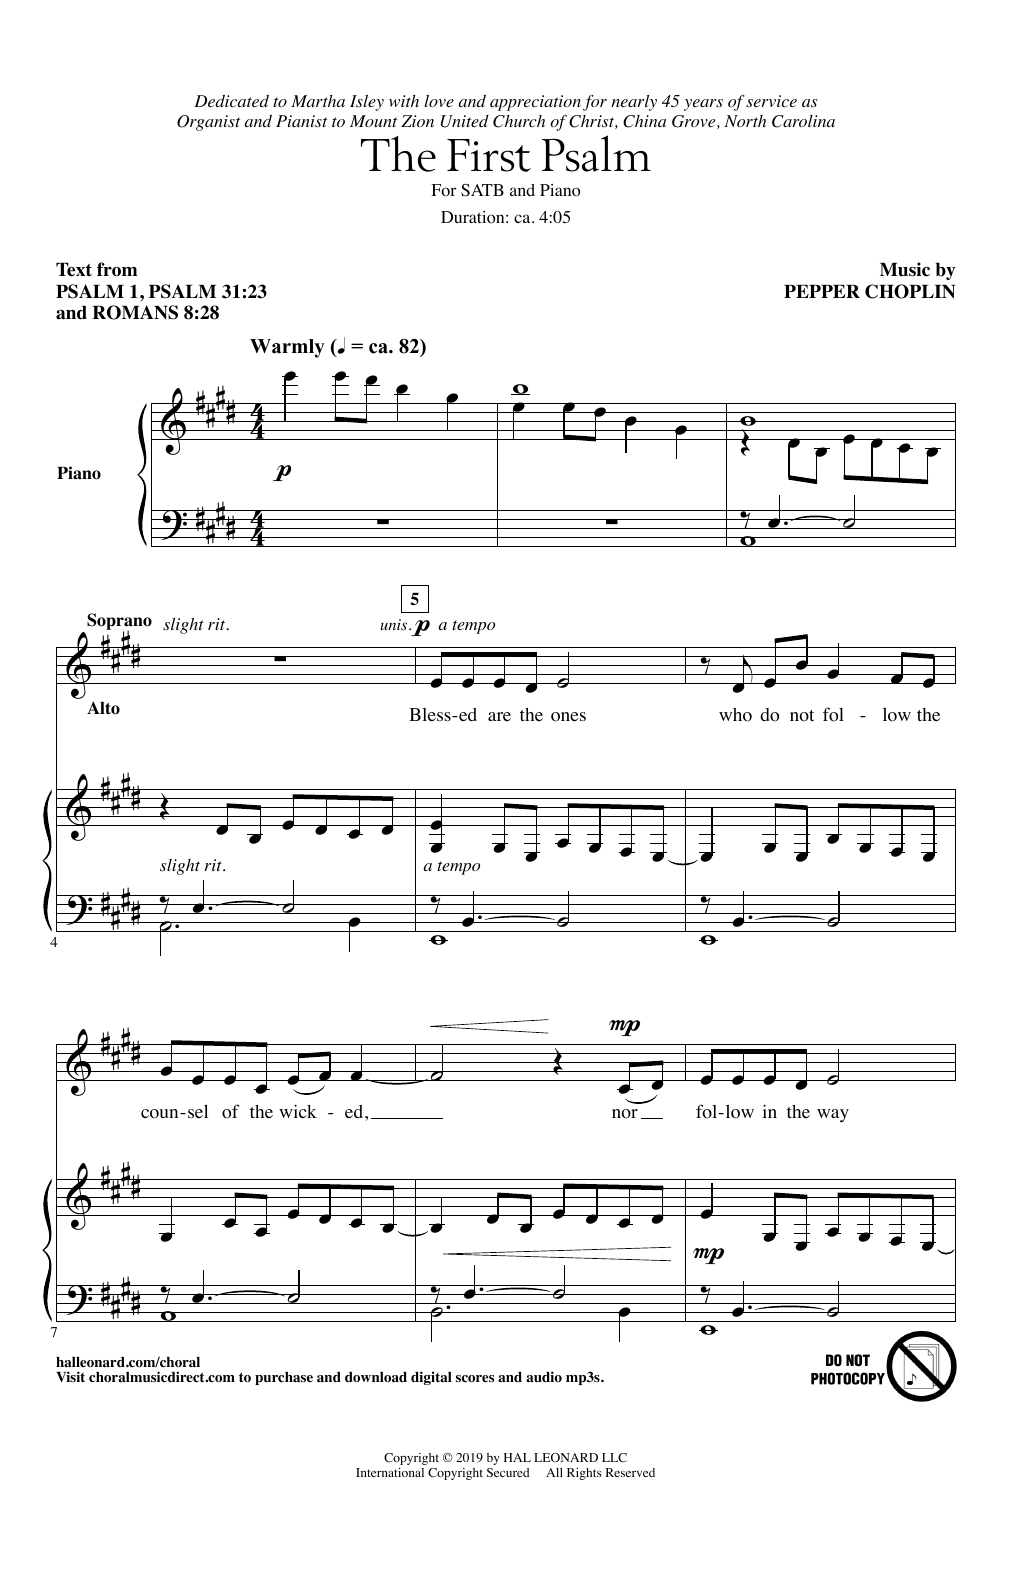 Pepper Choplin The First Psalm Sheet Music Notes & Chords for SATB Choir - Download or Print PDF